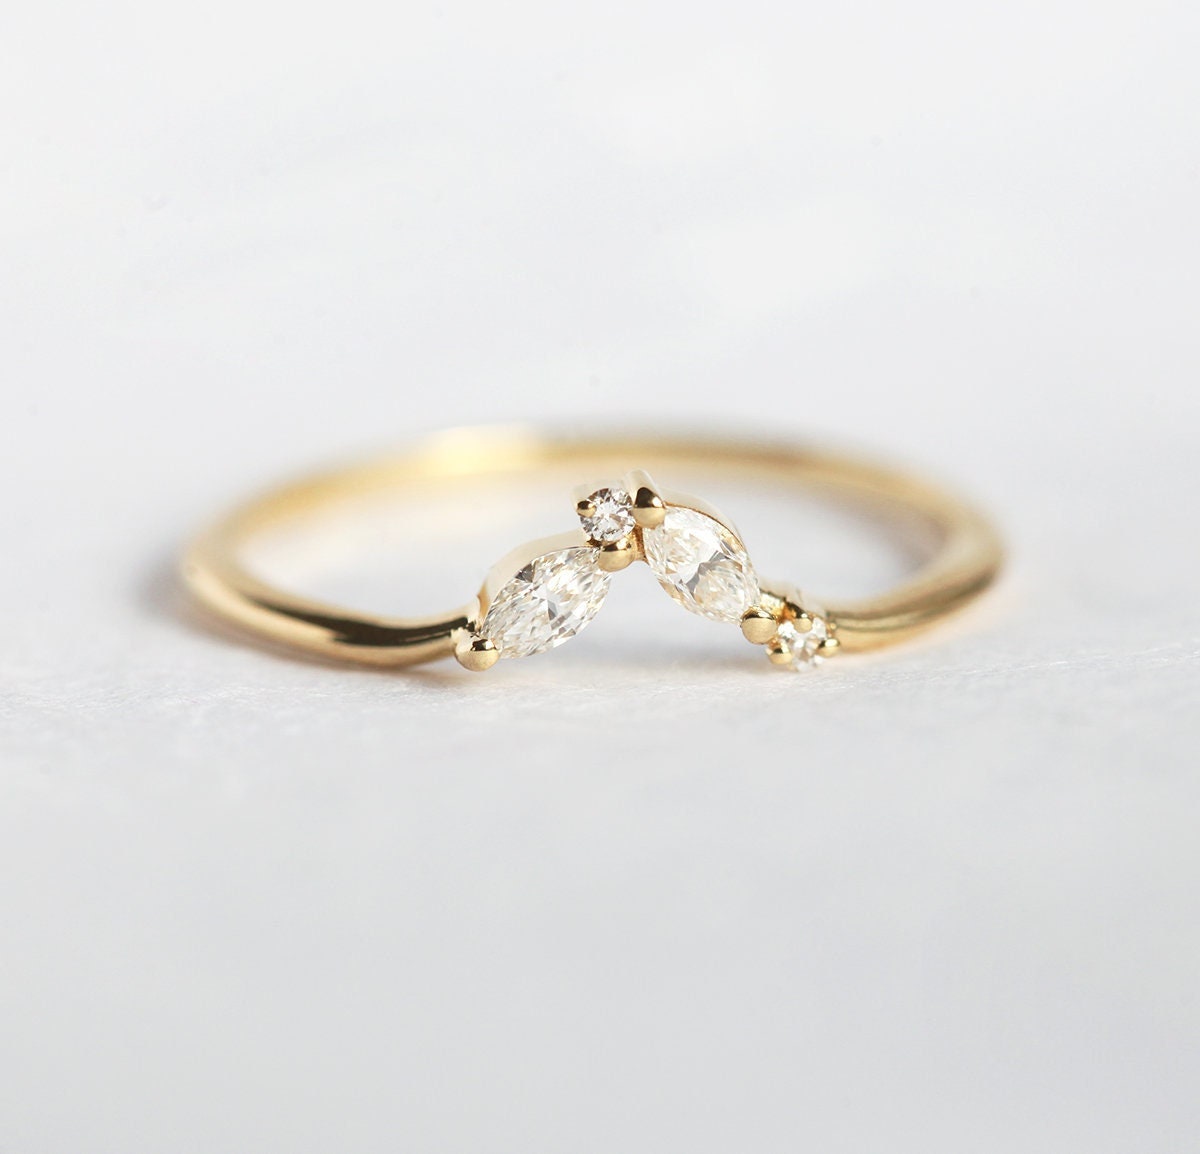 Oval-shaped white diamond curved wedding band